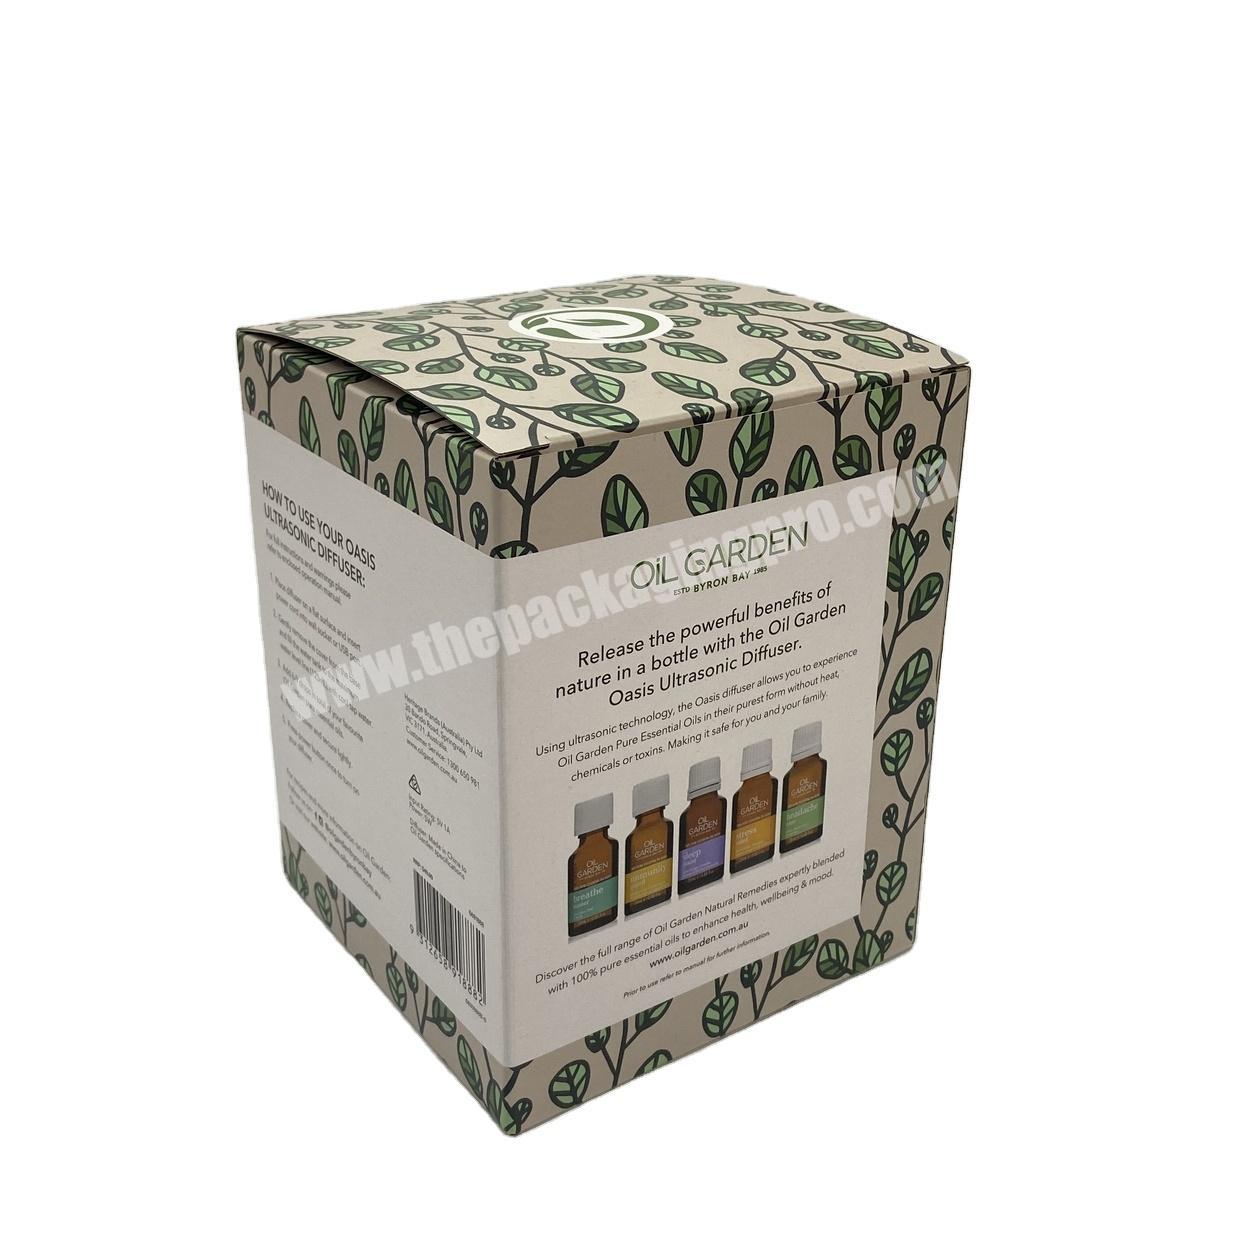 Factory cheap cardboard paper  gift box for vase bottle custom design corrugated mailer shipping boxes for wine bottle